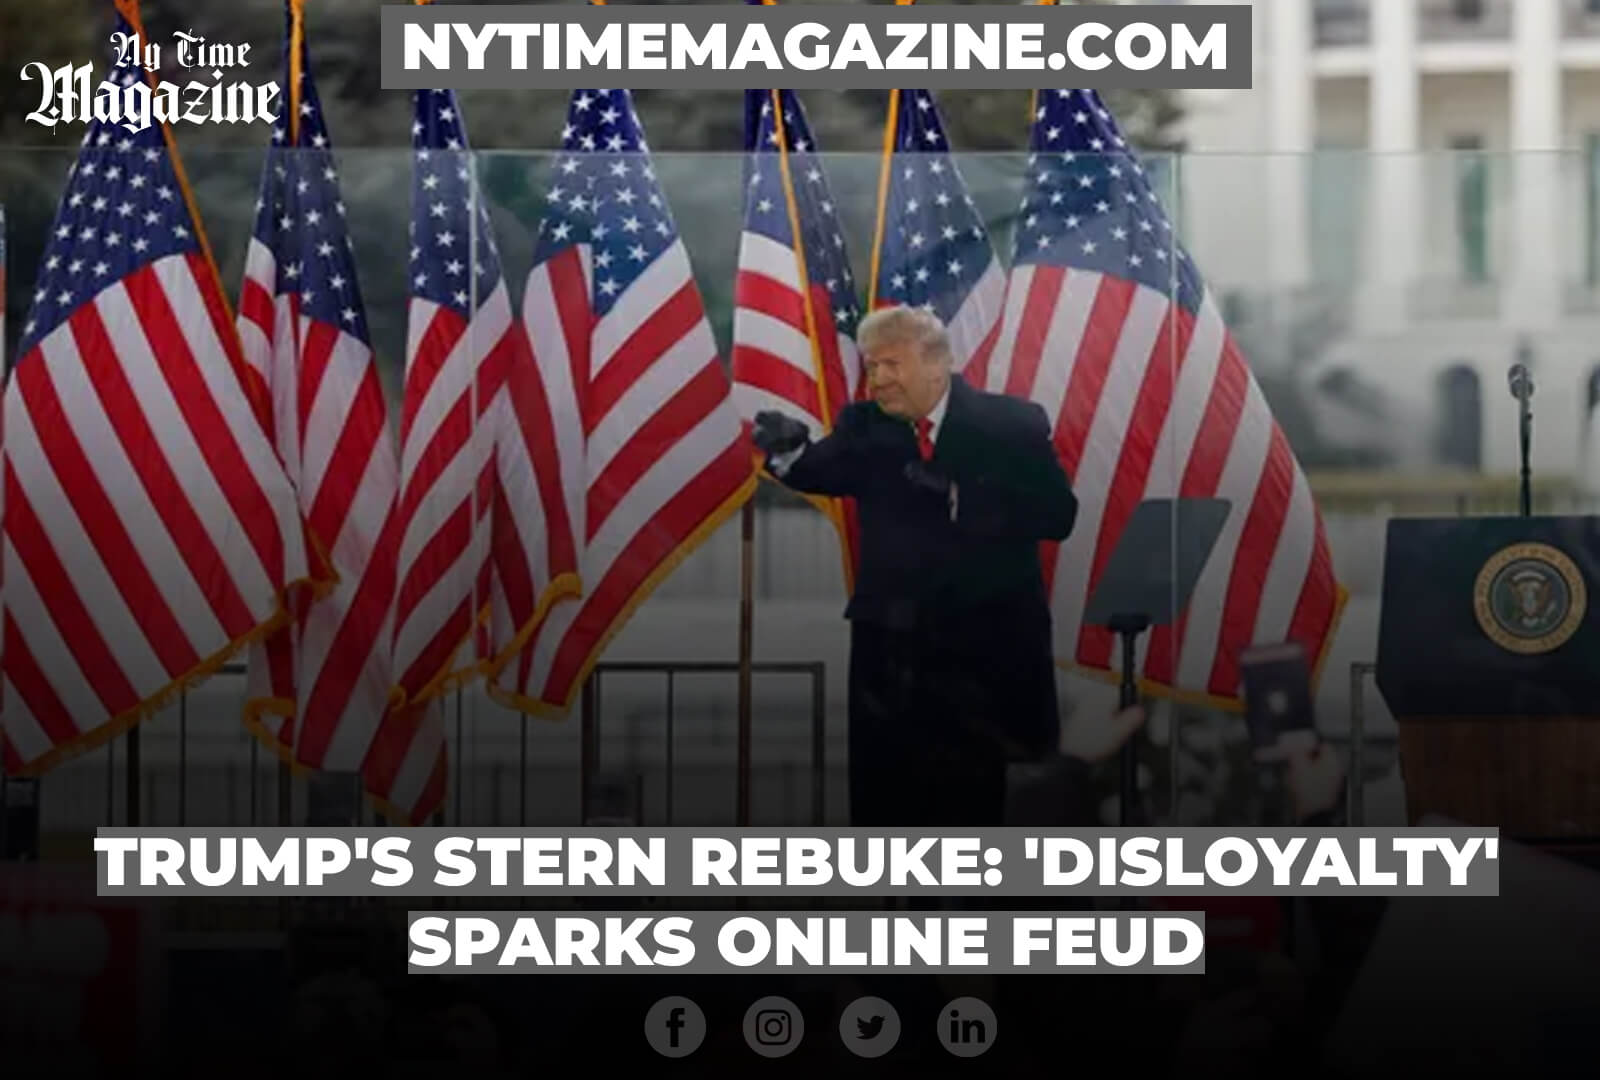 Trump's Stern Rebuke: 'Disloyalty' Sparks Online Feud